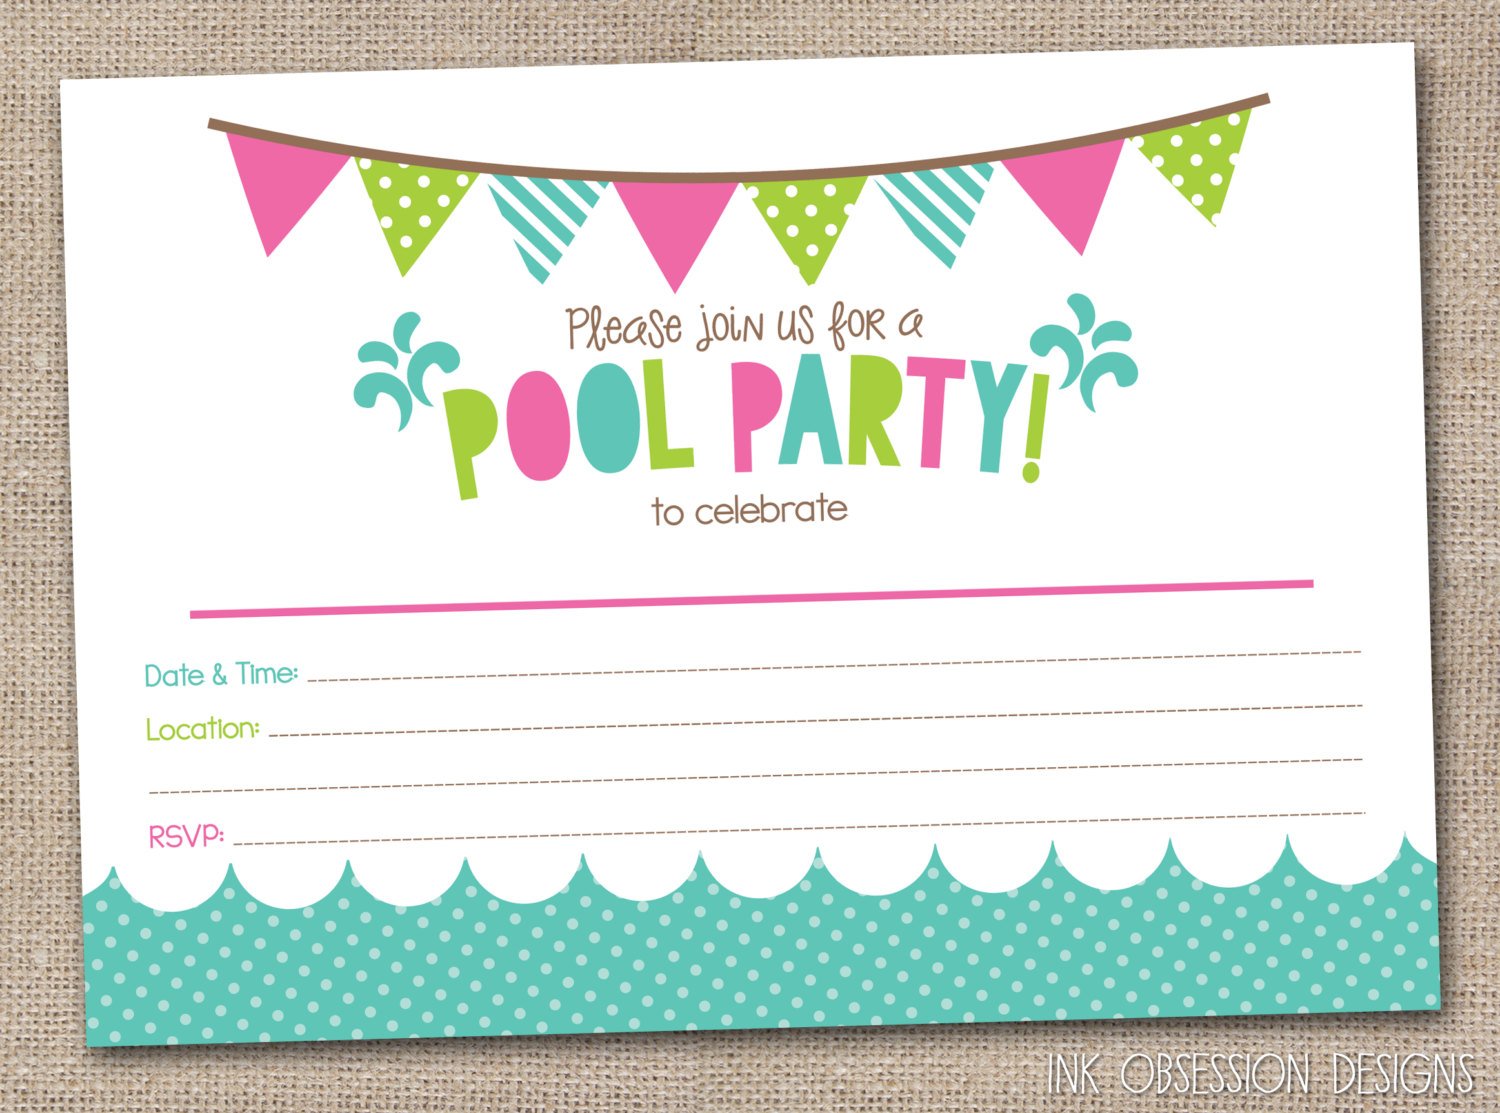 Free Birthday Party Invitations For Girl Free Printable Birthday